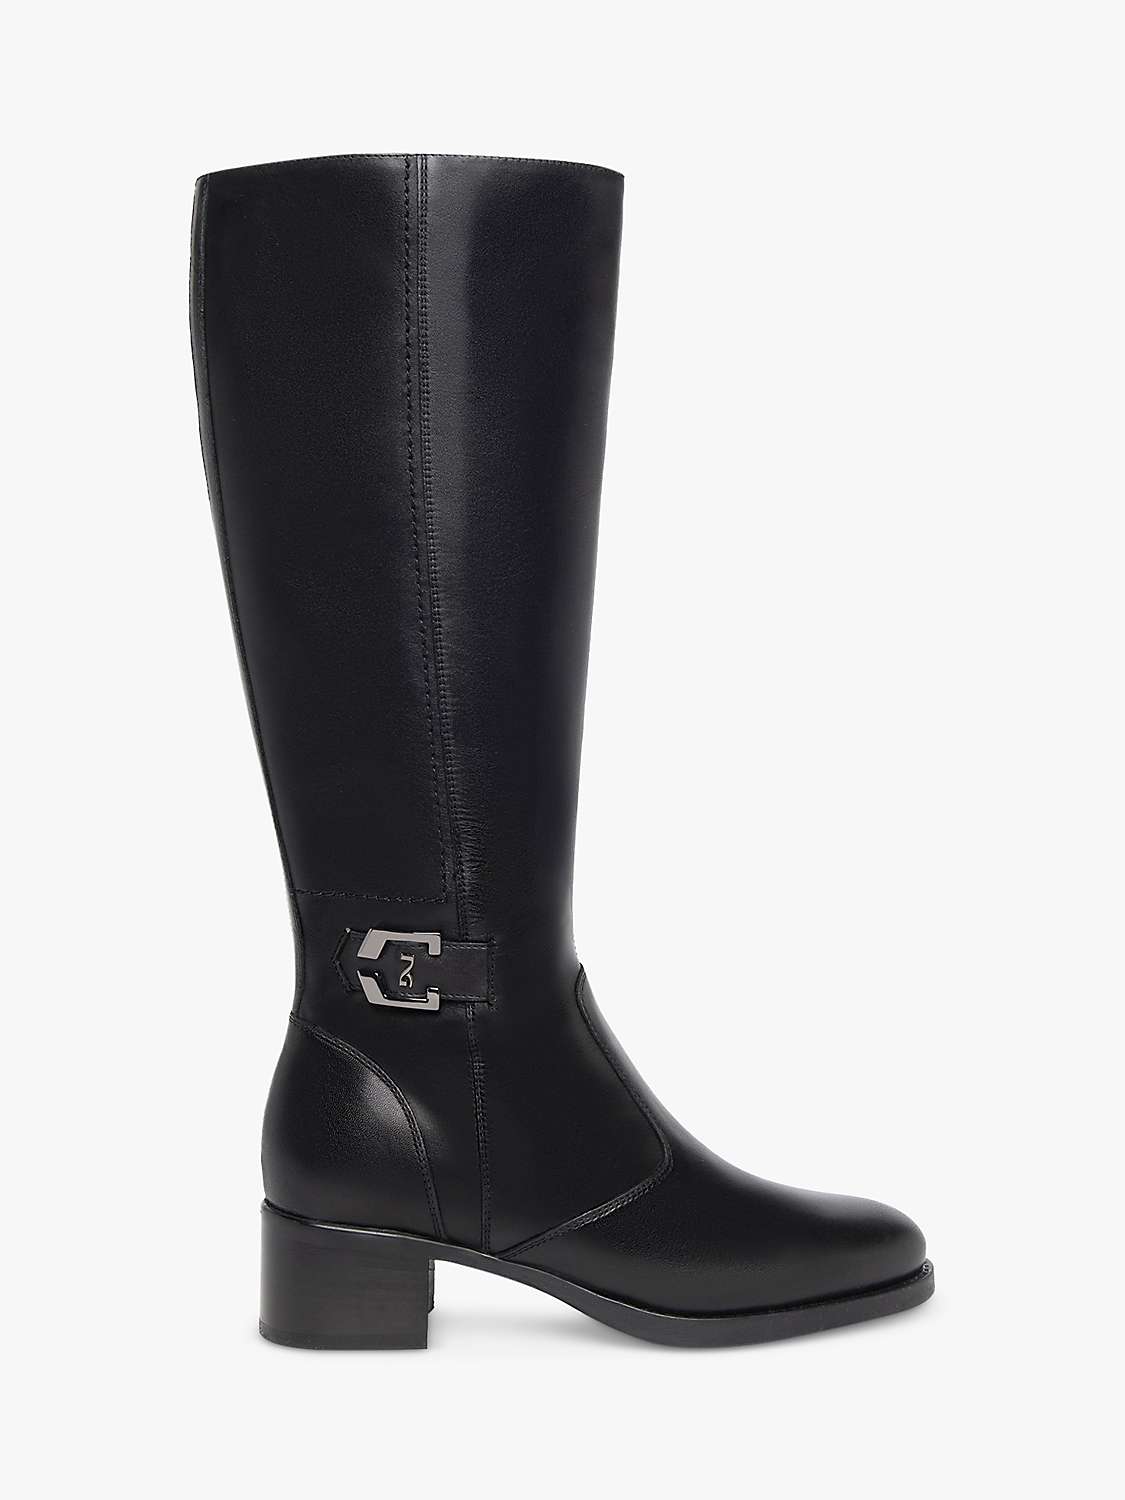 NeroGiardini Leather Knee High Boots, Black at John Lewis & Partners